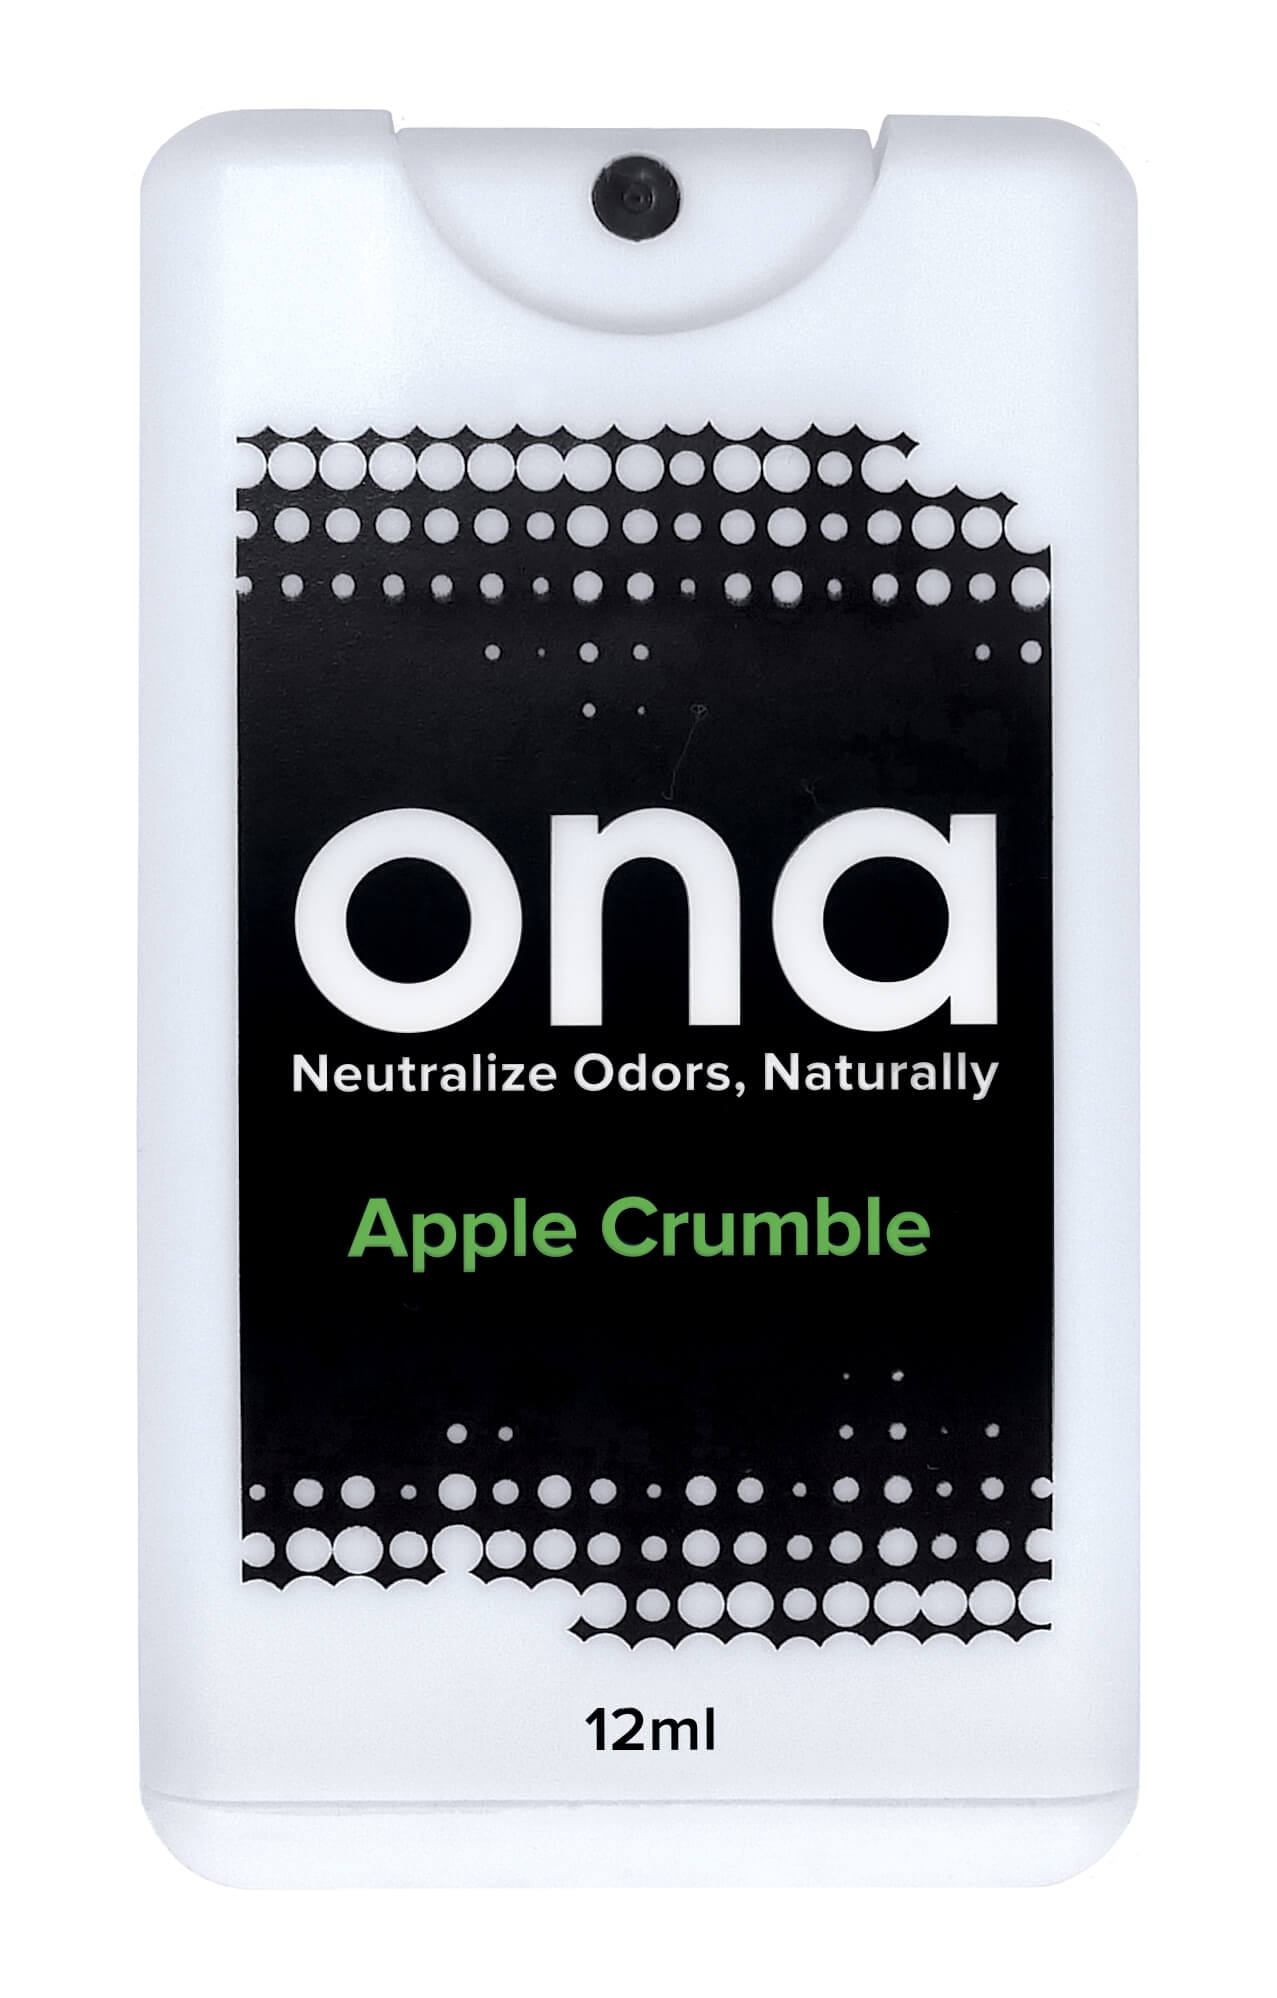 ONA Card Spray Fresh Linen 12ml